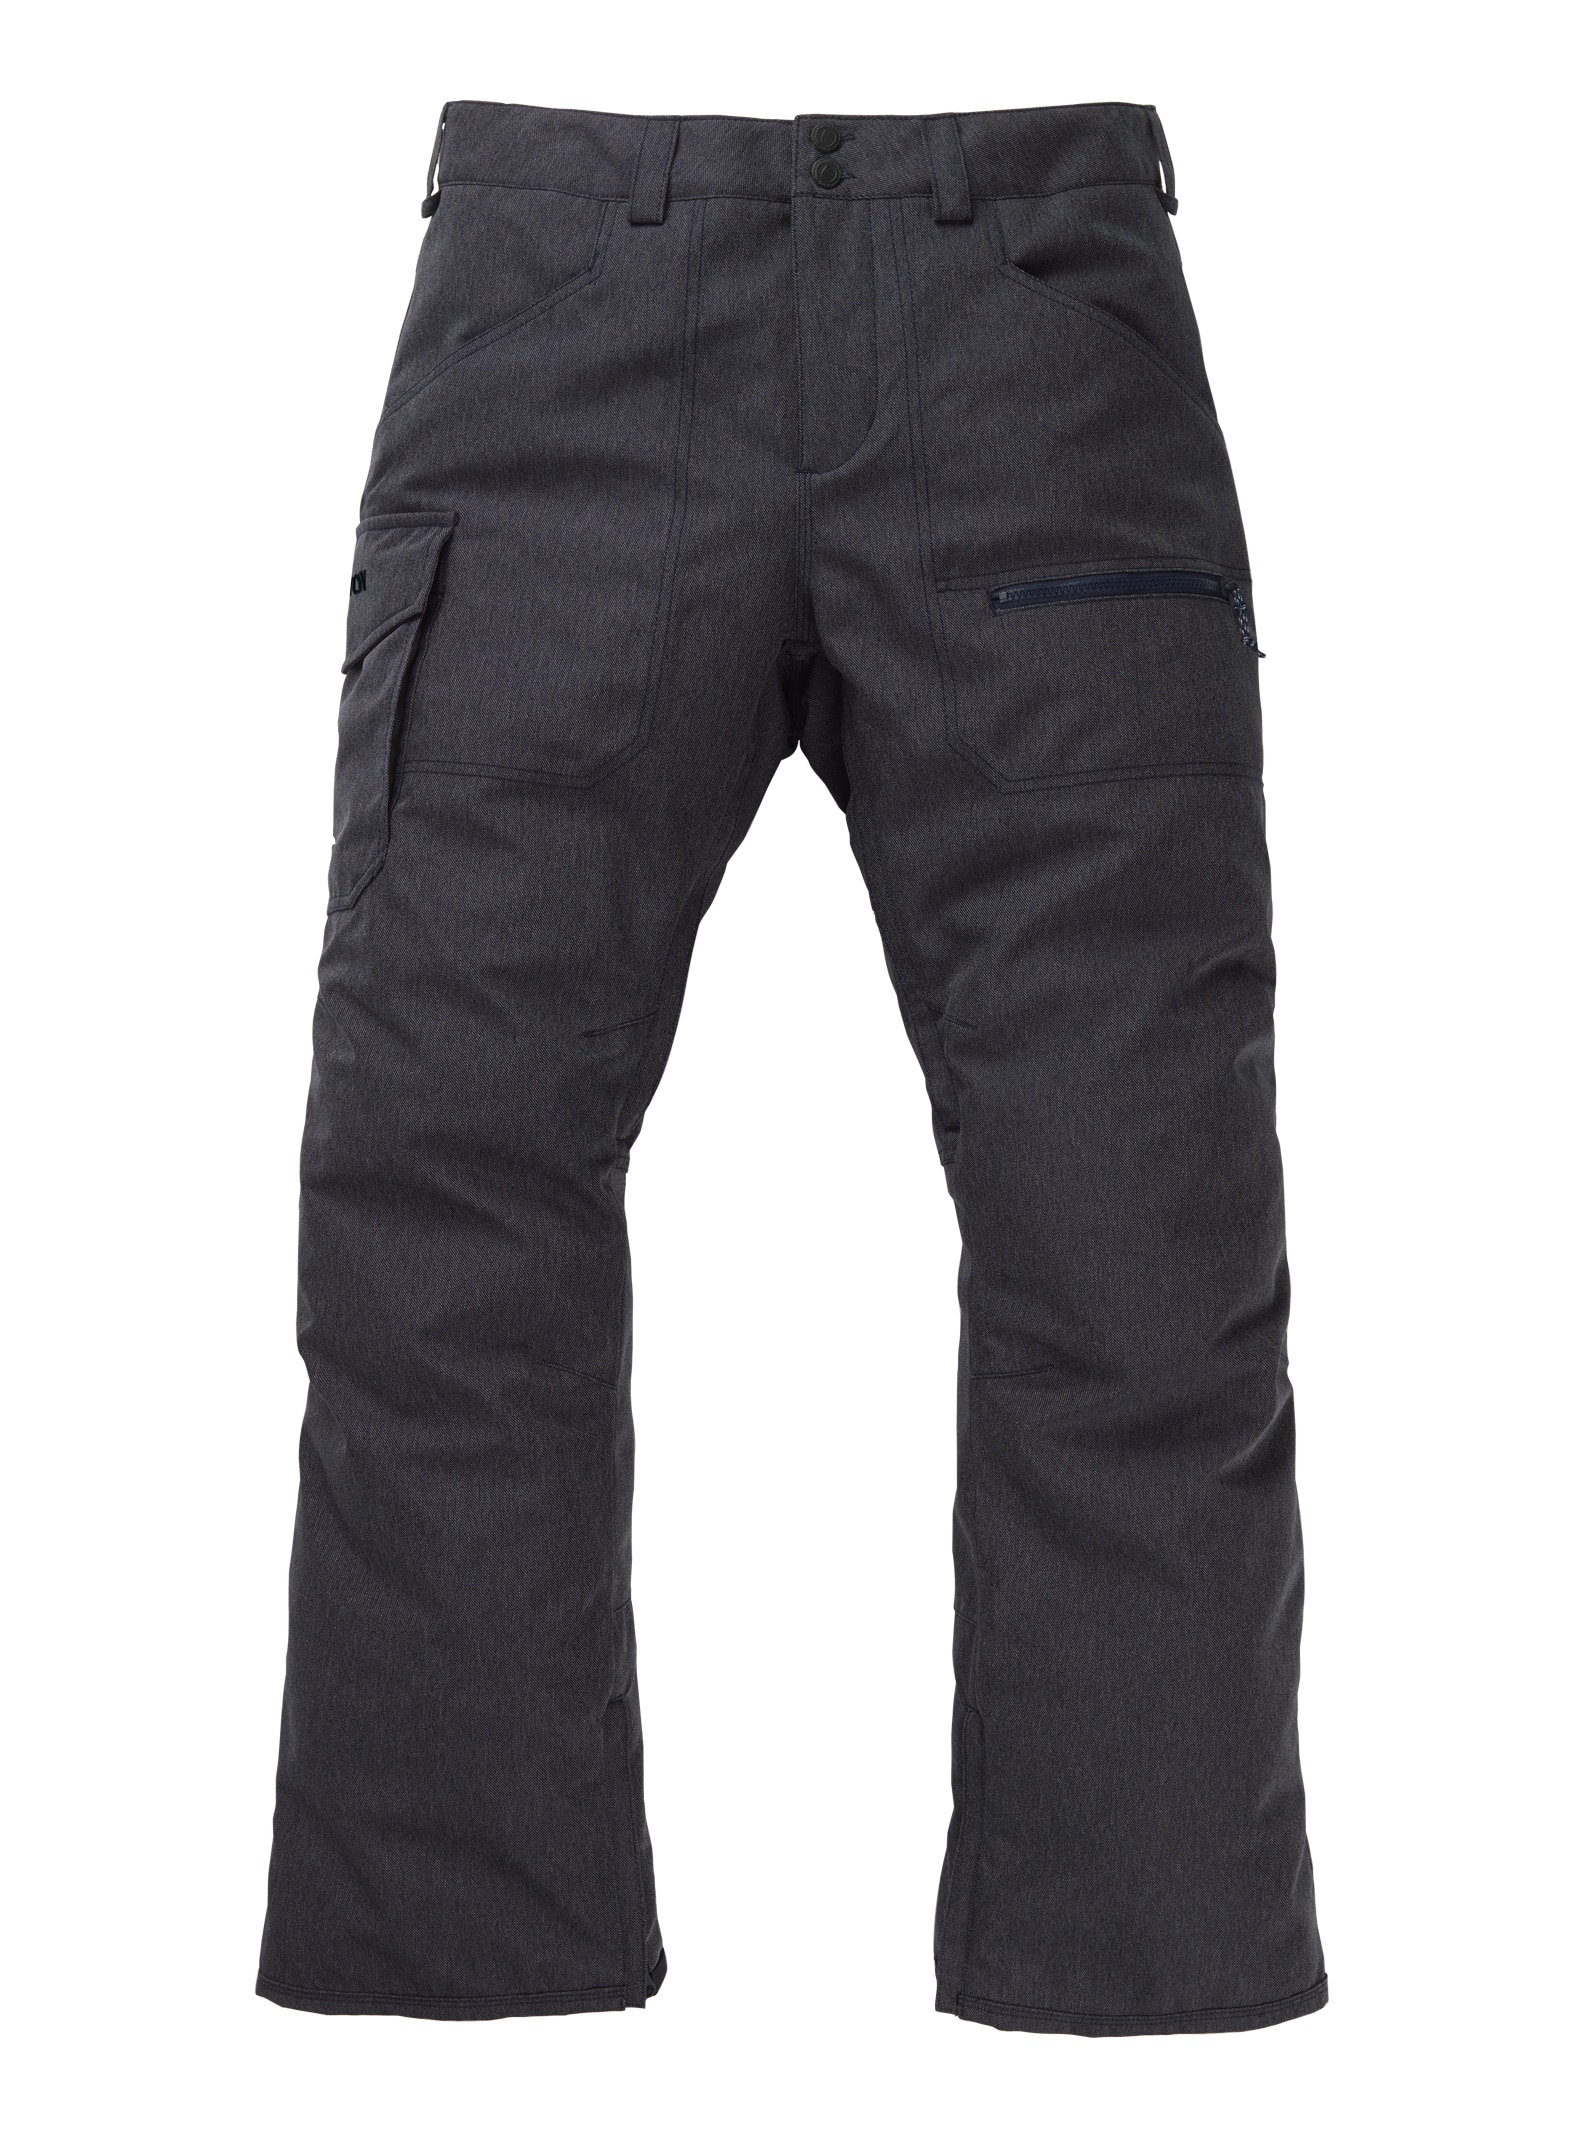 Men's Covert Insulated Pants | Burton.com Winter 2023 US